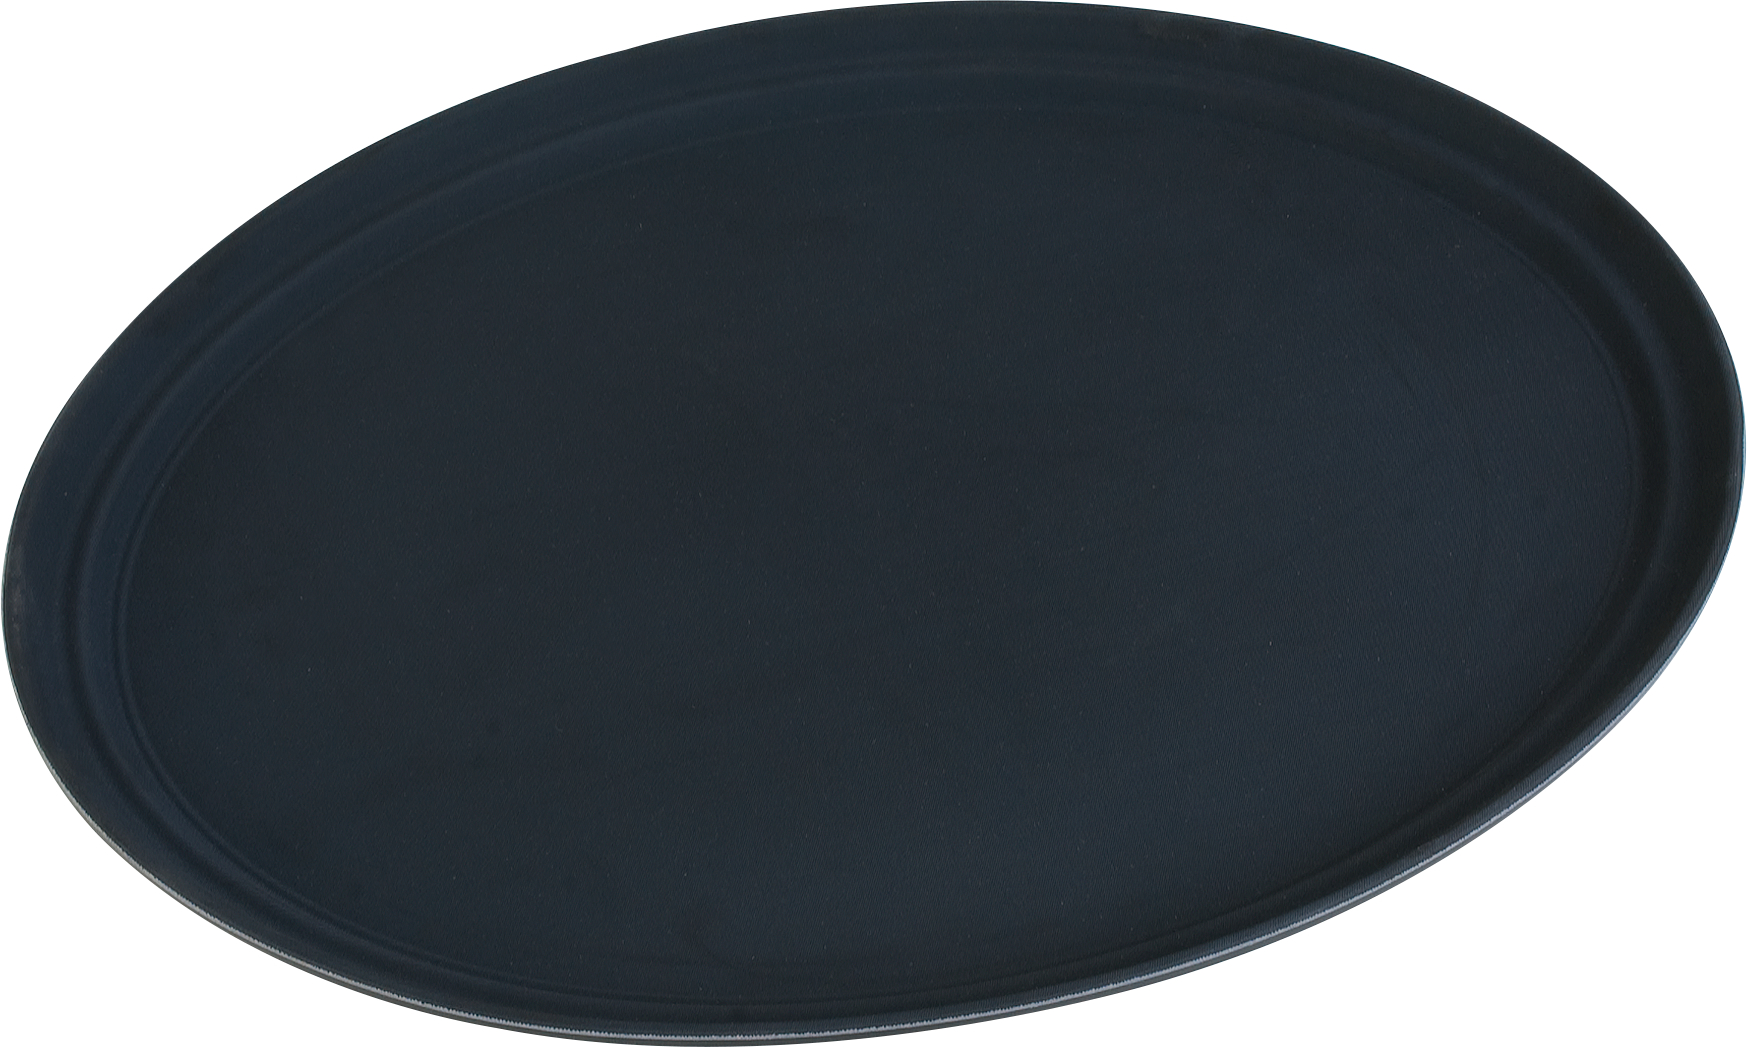 Truebasics Oval Grip Tray 27 x 22 - Black